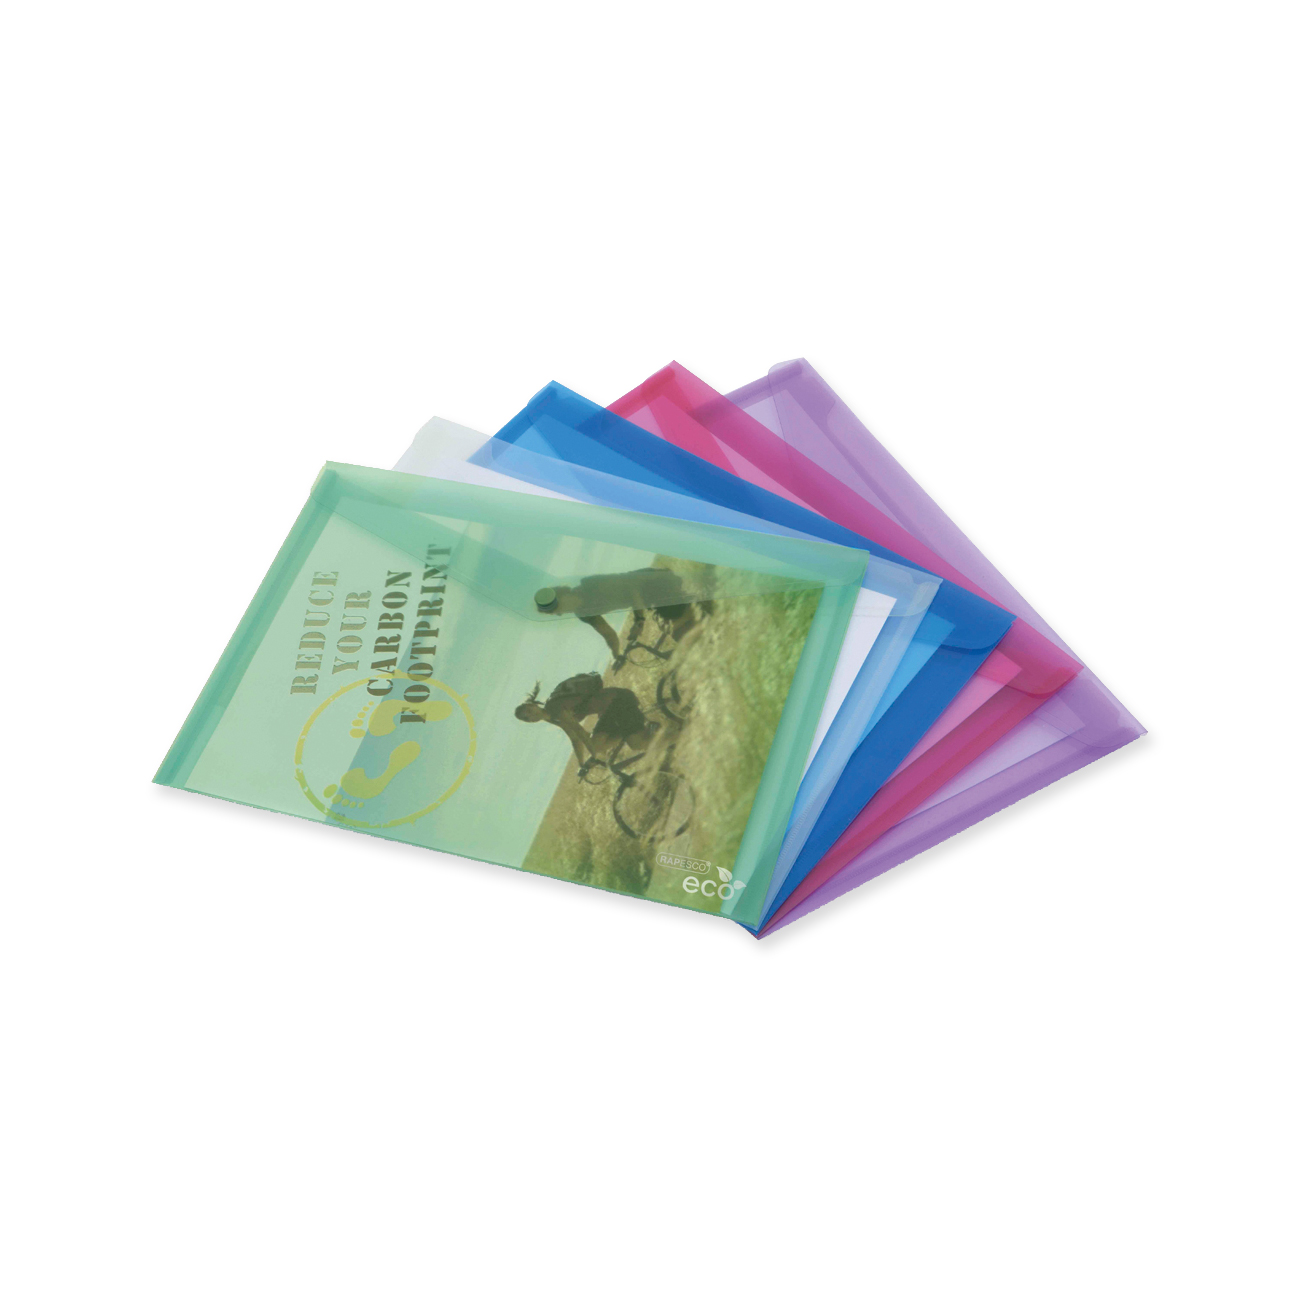 Rapesco Eco Dokumentenmappe mit Druckknopf assortiert (grün, farblos, blau, pink, violett)